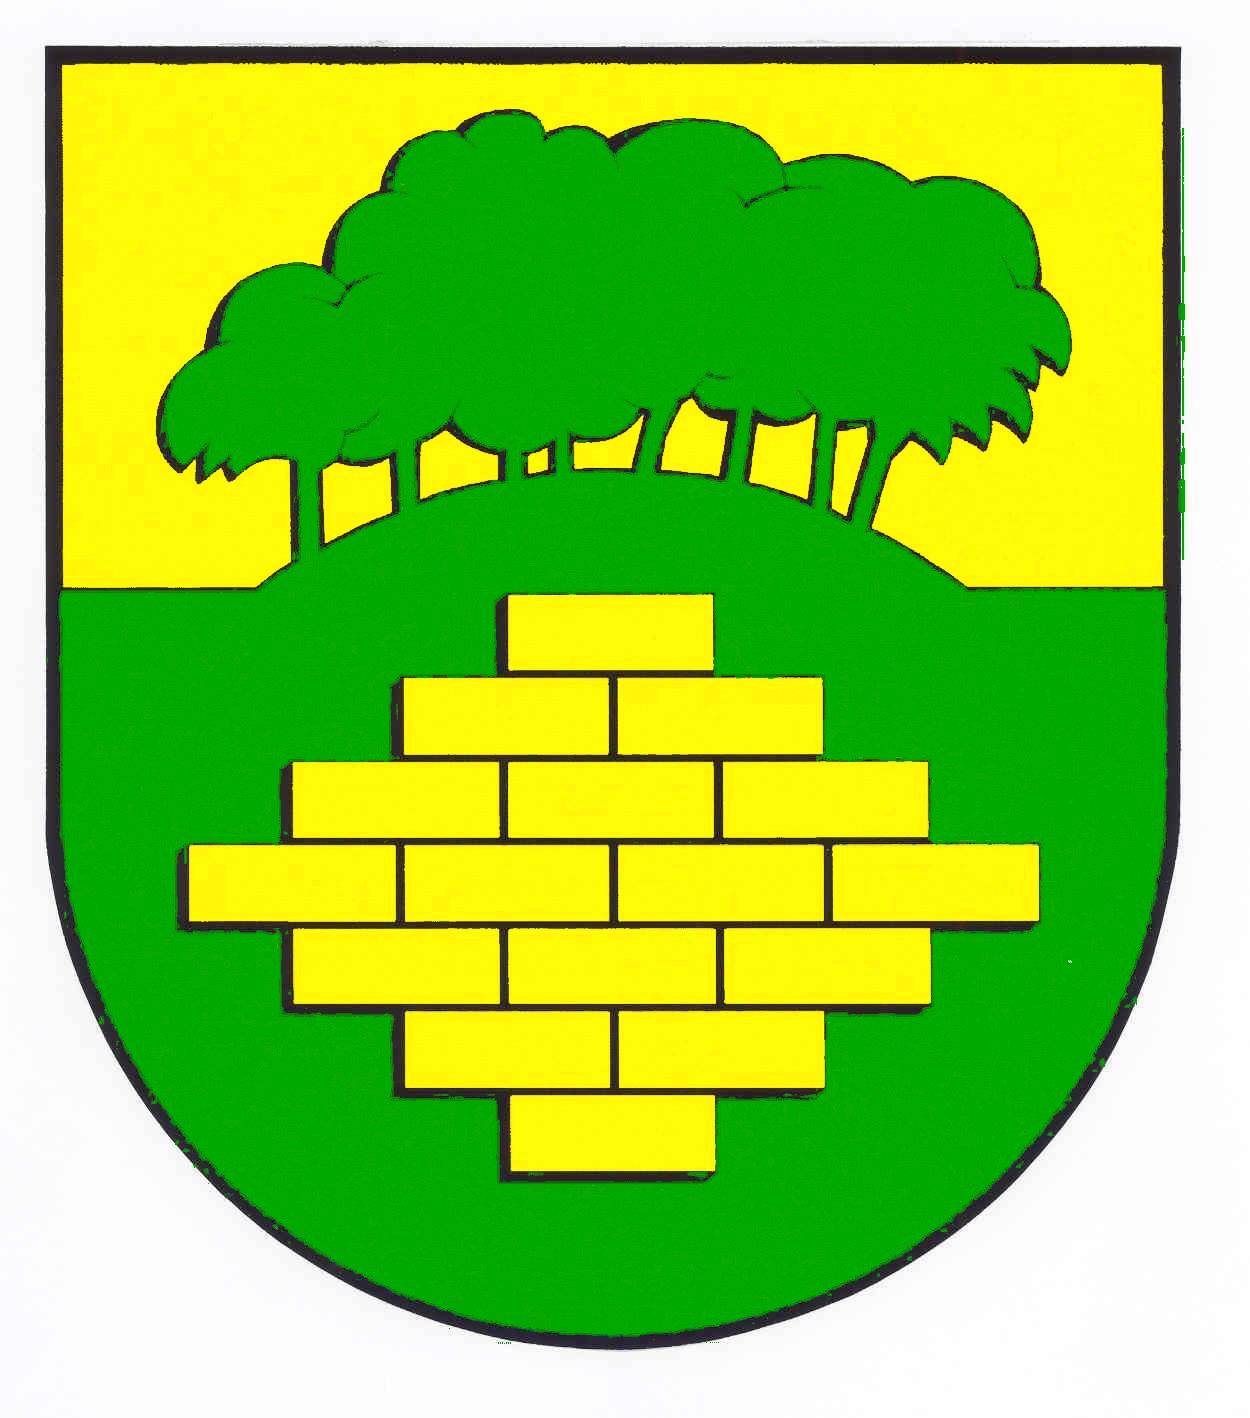 Wappen von Warringholz / Arms of Warringholz